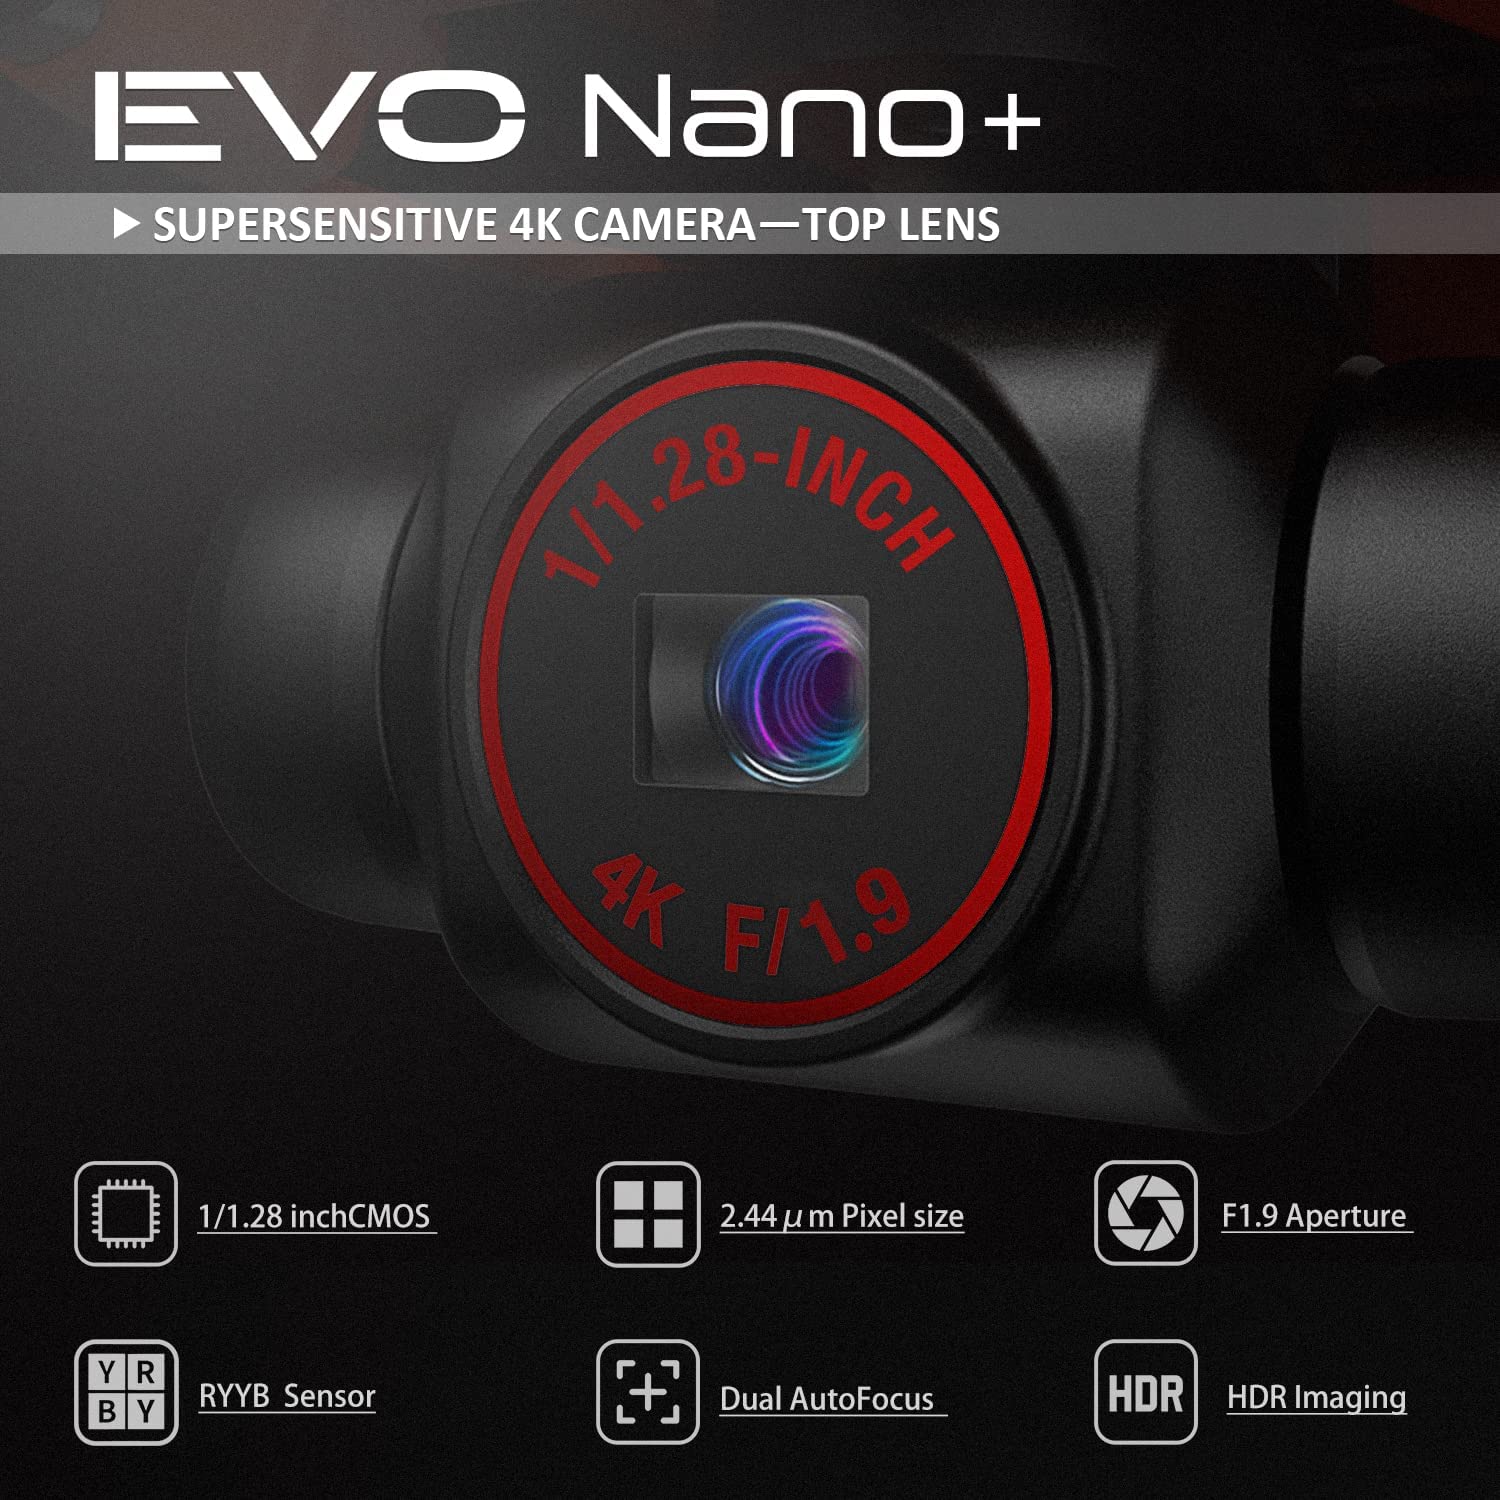 autel robotics evo nano+ has 4K professional camera